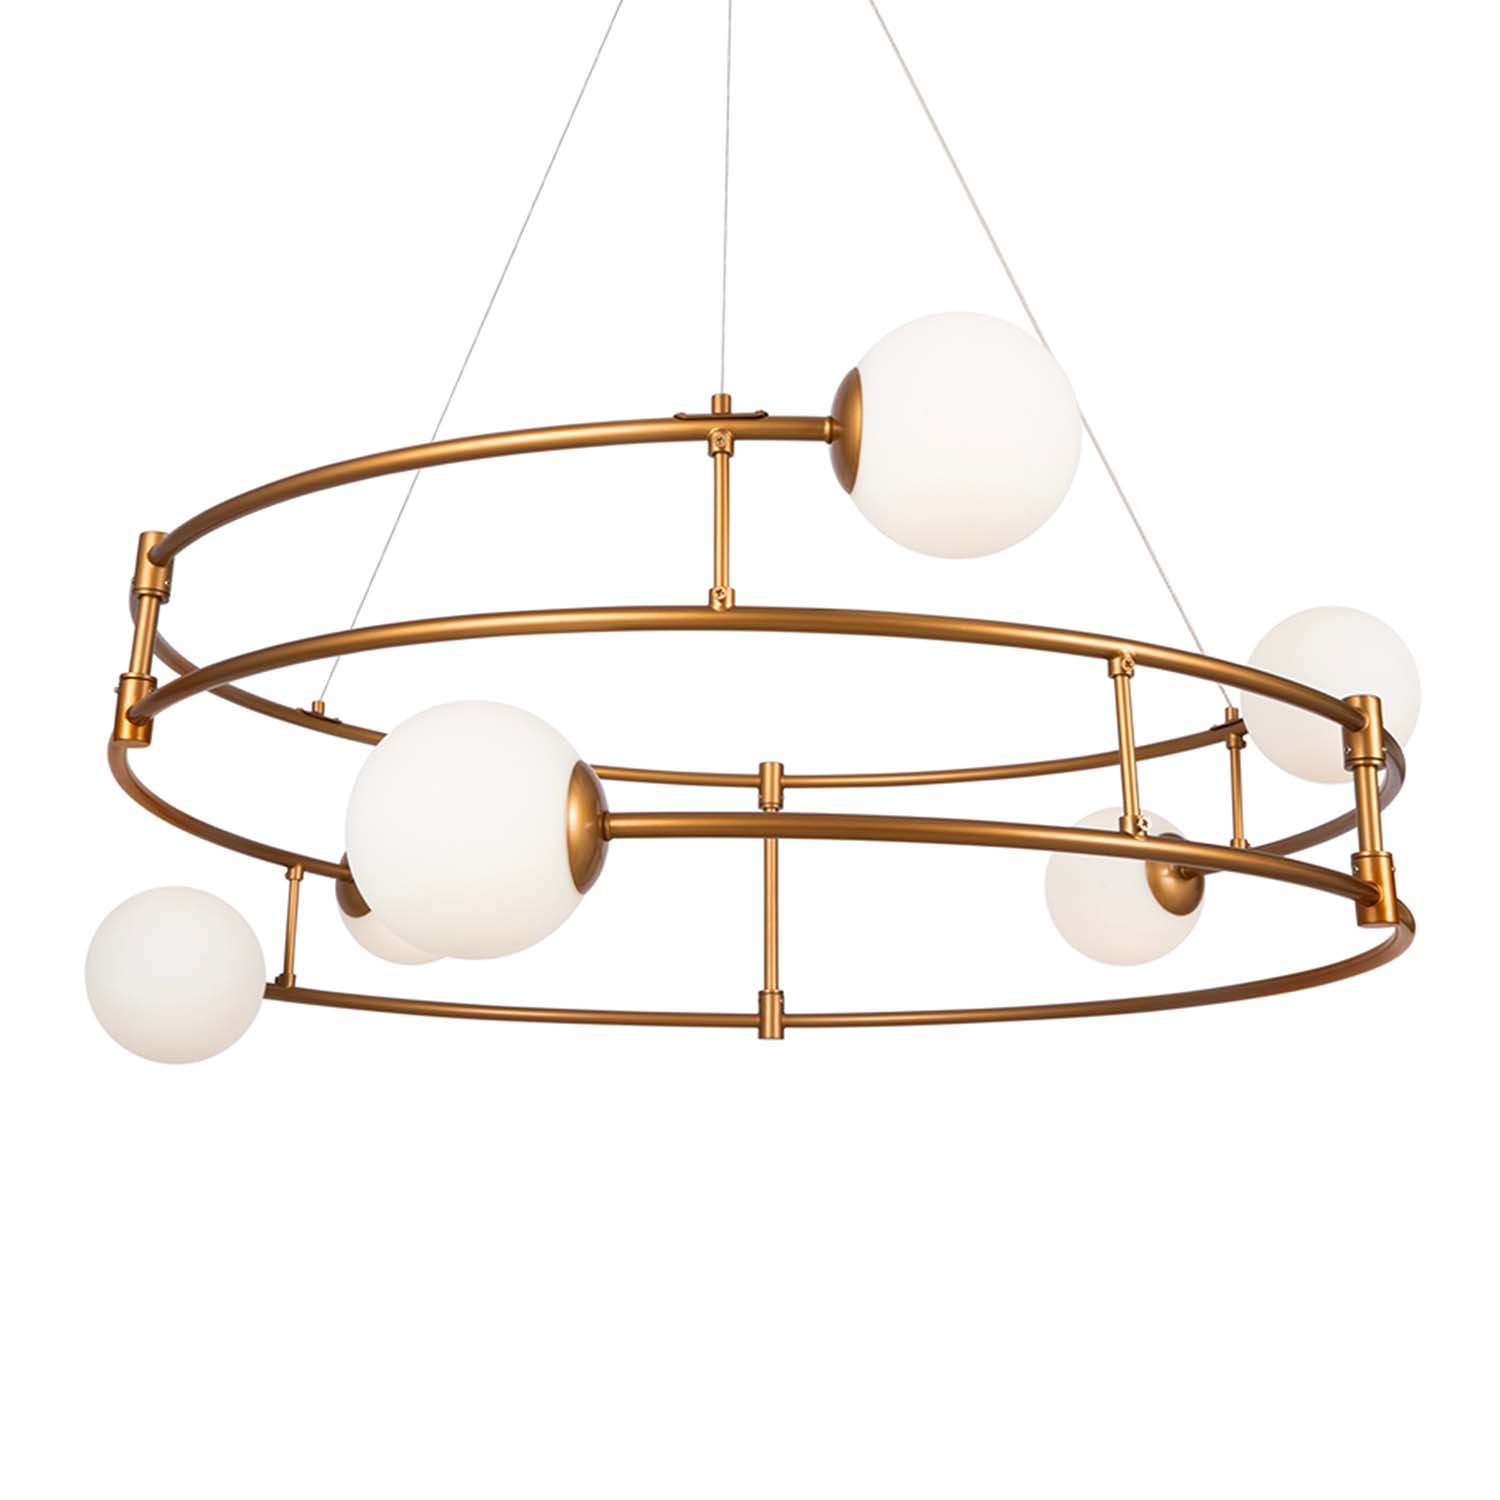 BALANCE - Circular chandelier with contemporary glass balls